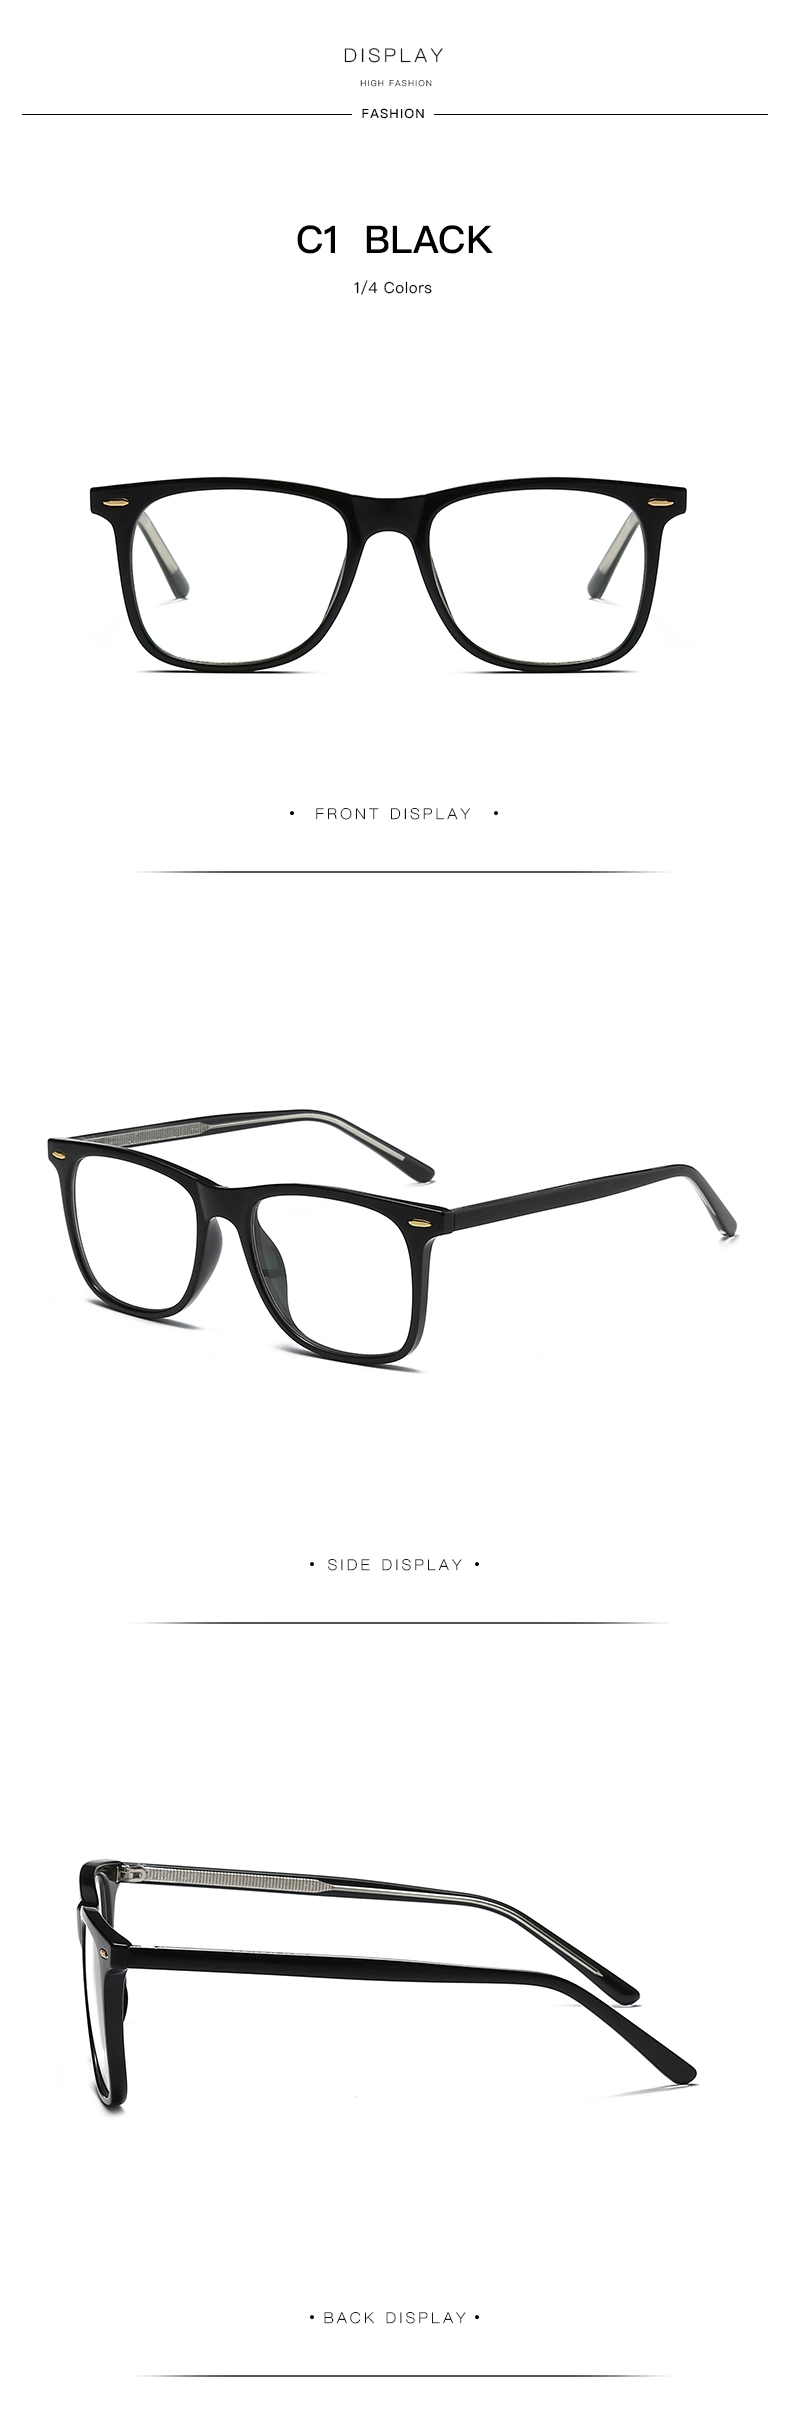 2021 New Fashion Designed Mens Glasses Anti Blue Light Lens Ready Stocks Retro Frames